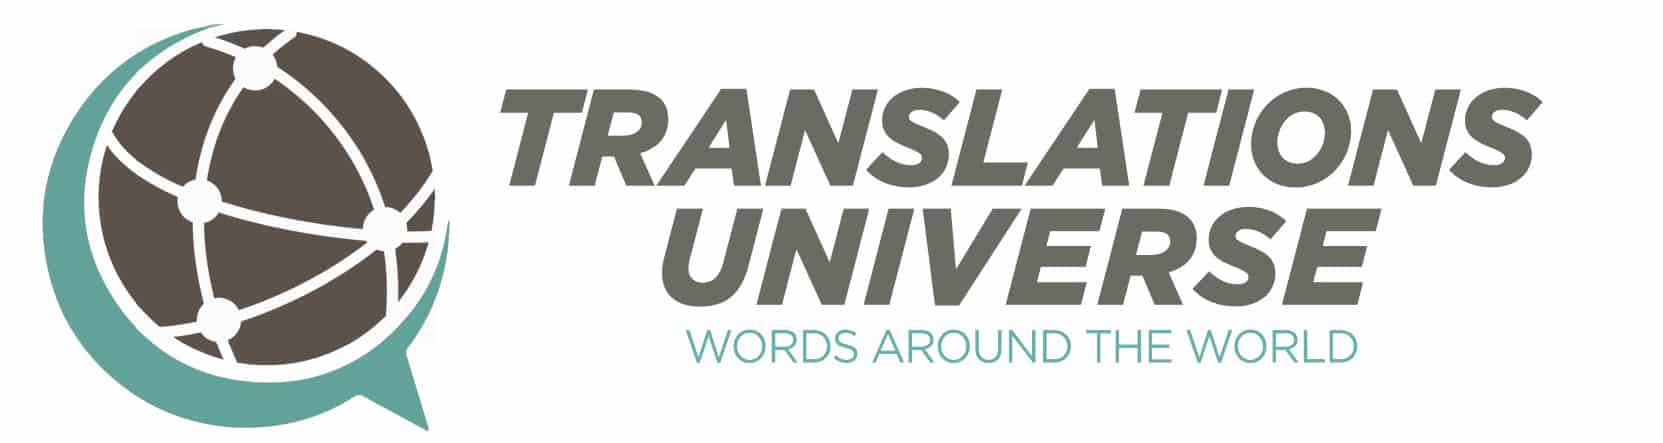 translations-universe